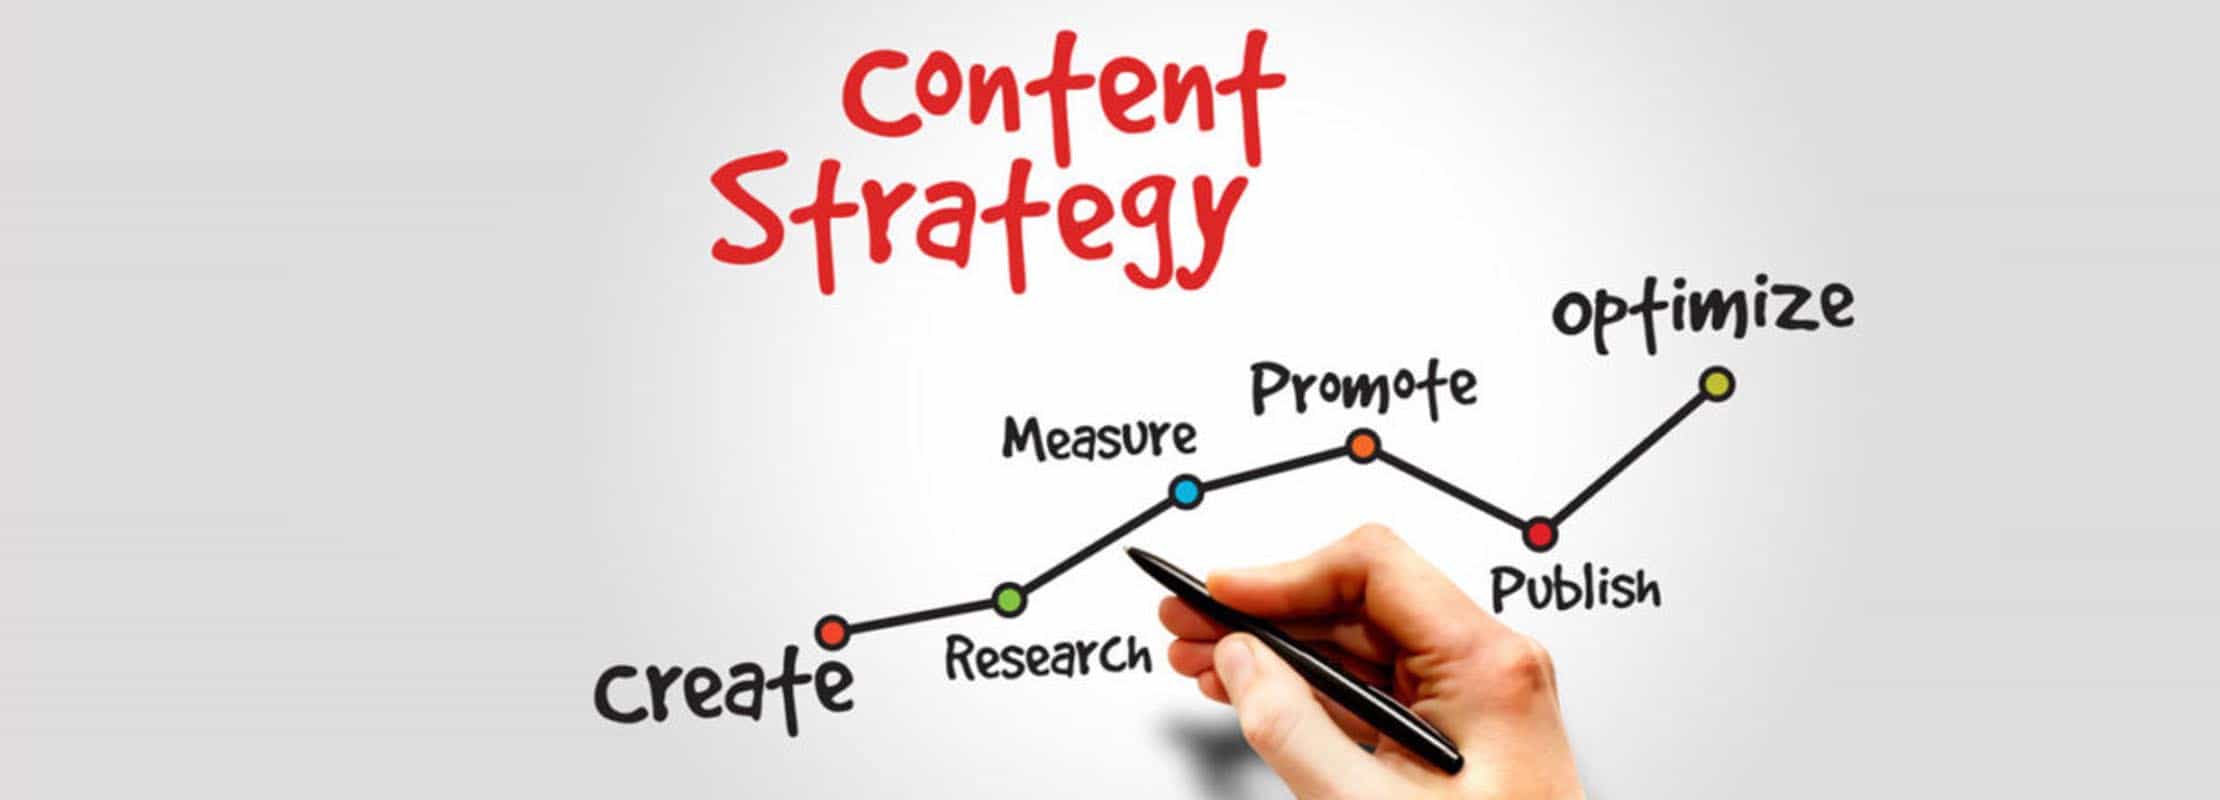 content strategy as heading|create|measure|research|promote|publish|optimize|web design company in kerala